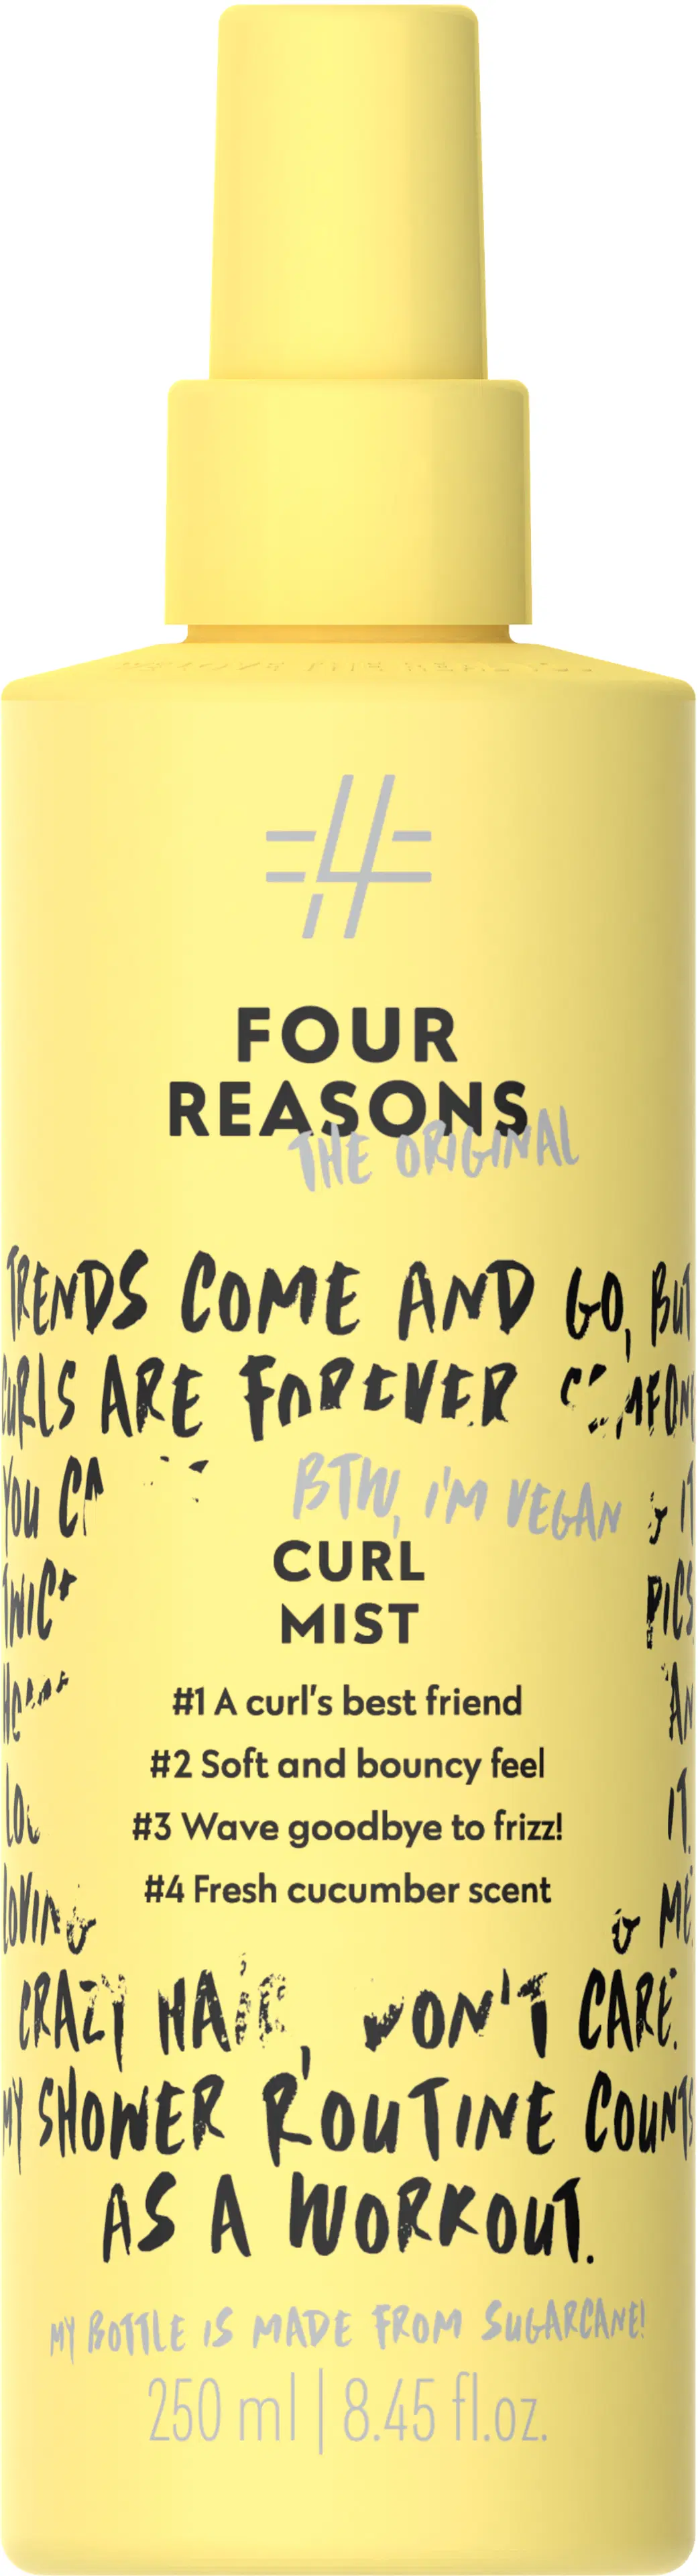 Four Reasons Original Curl Mist hoitosuihke 250 ml